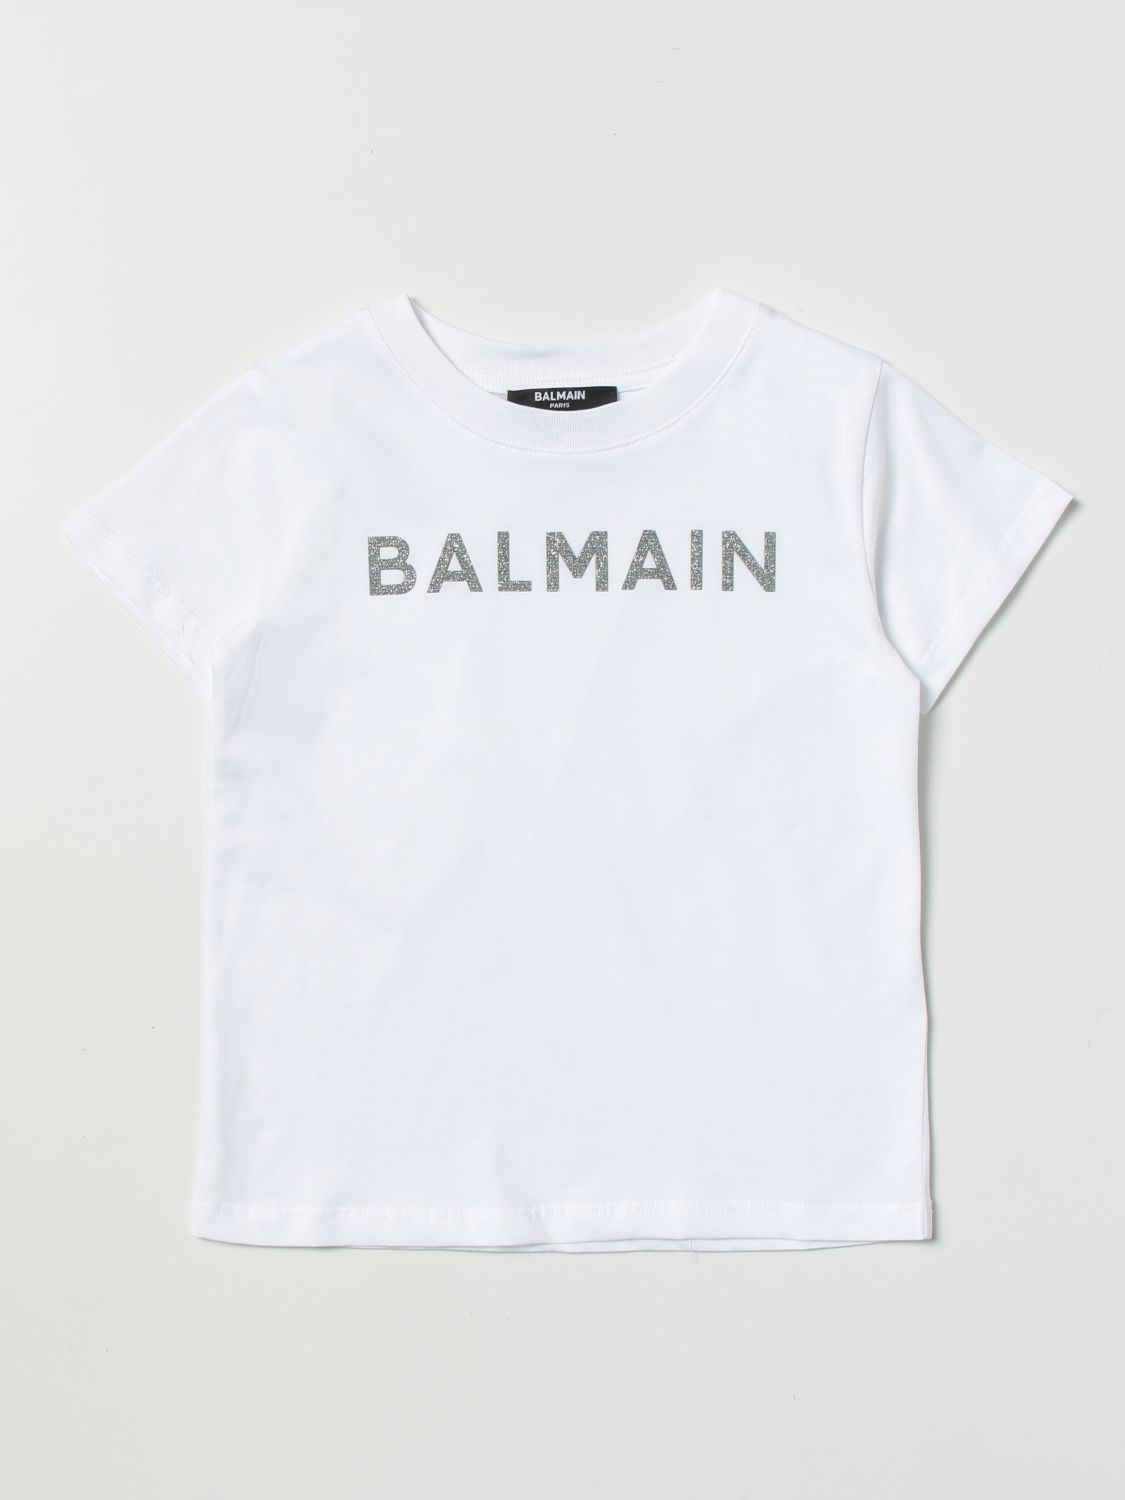 BALMAIN T-SHIRT BALMAIN KIDS KIDS COLOR WHITE,D82344001